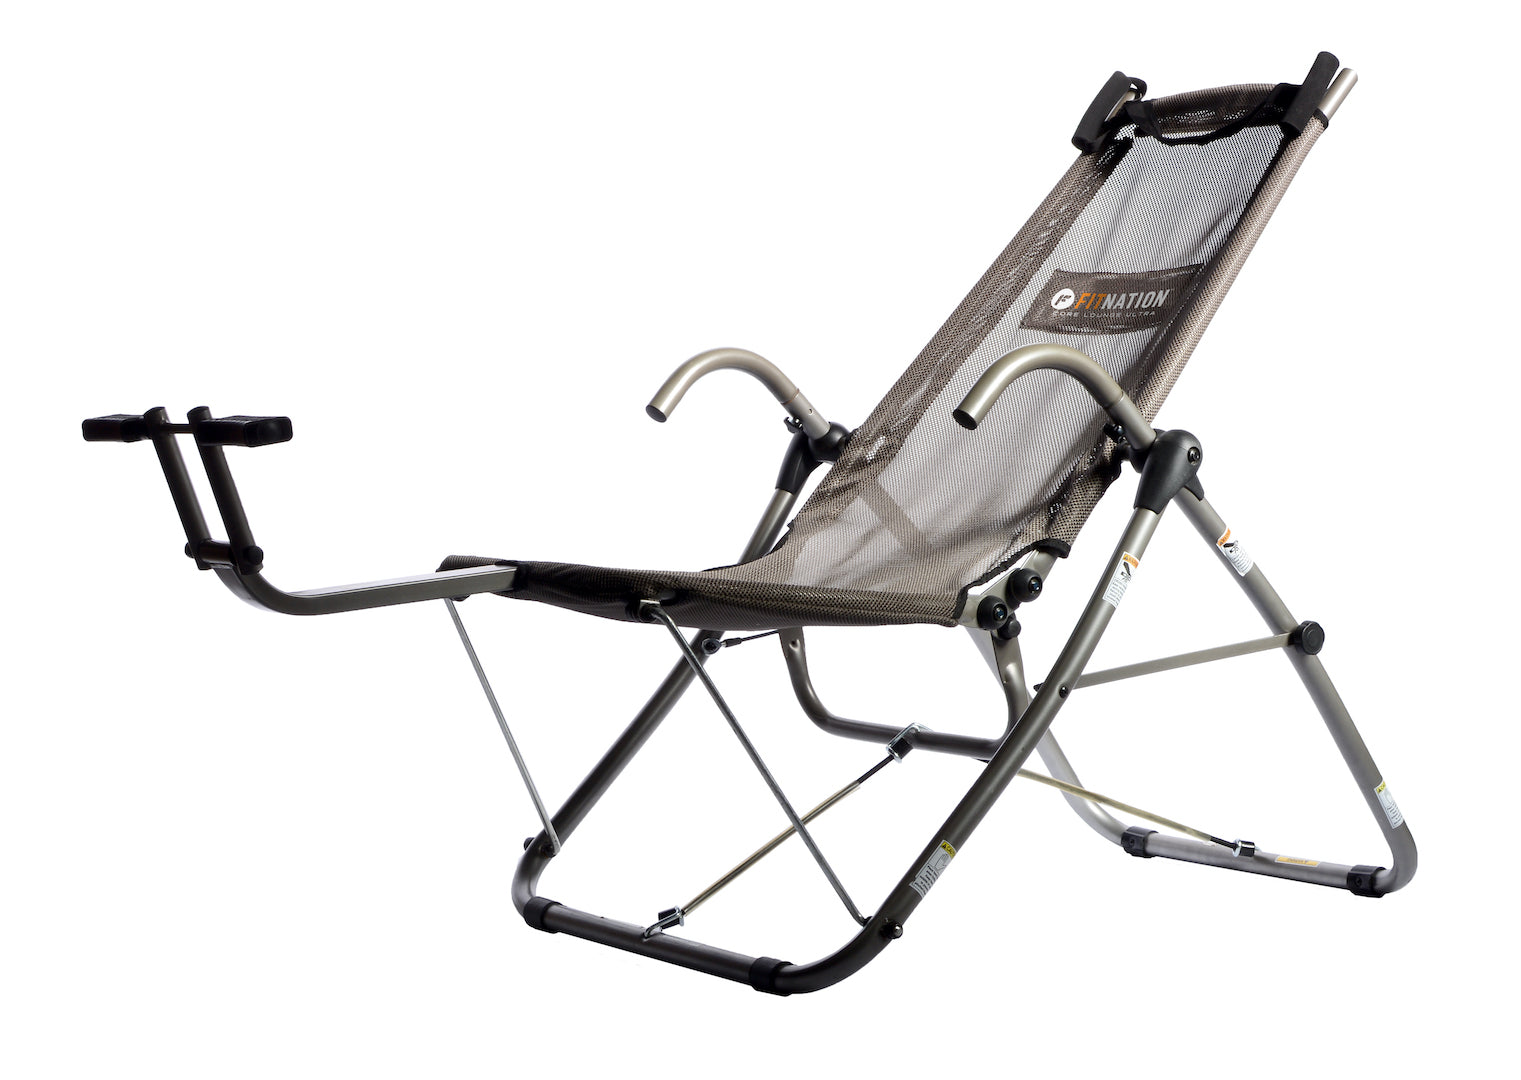 Fitnation Core Lounge Ultra Workout Chair Fitnation By Echelon